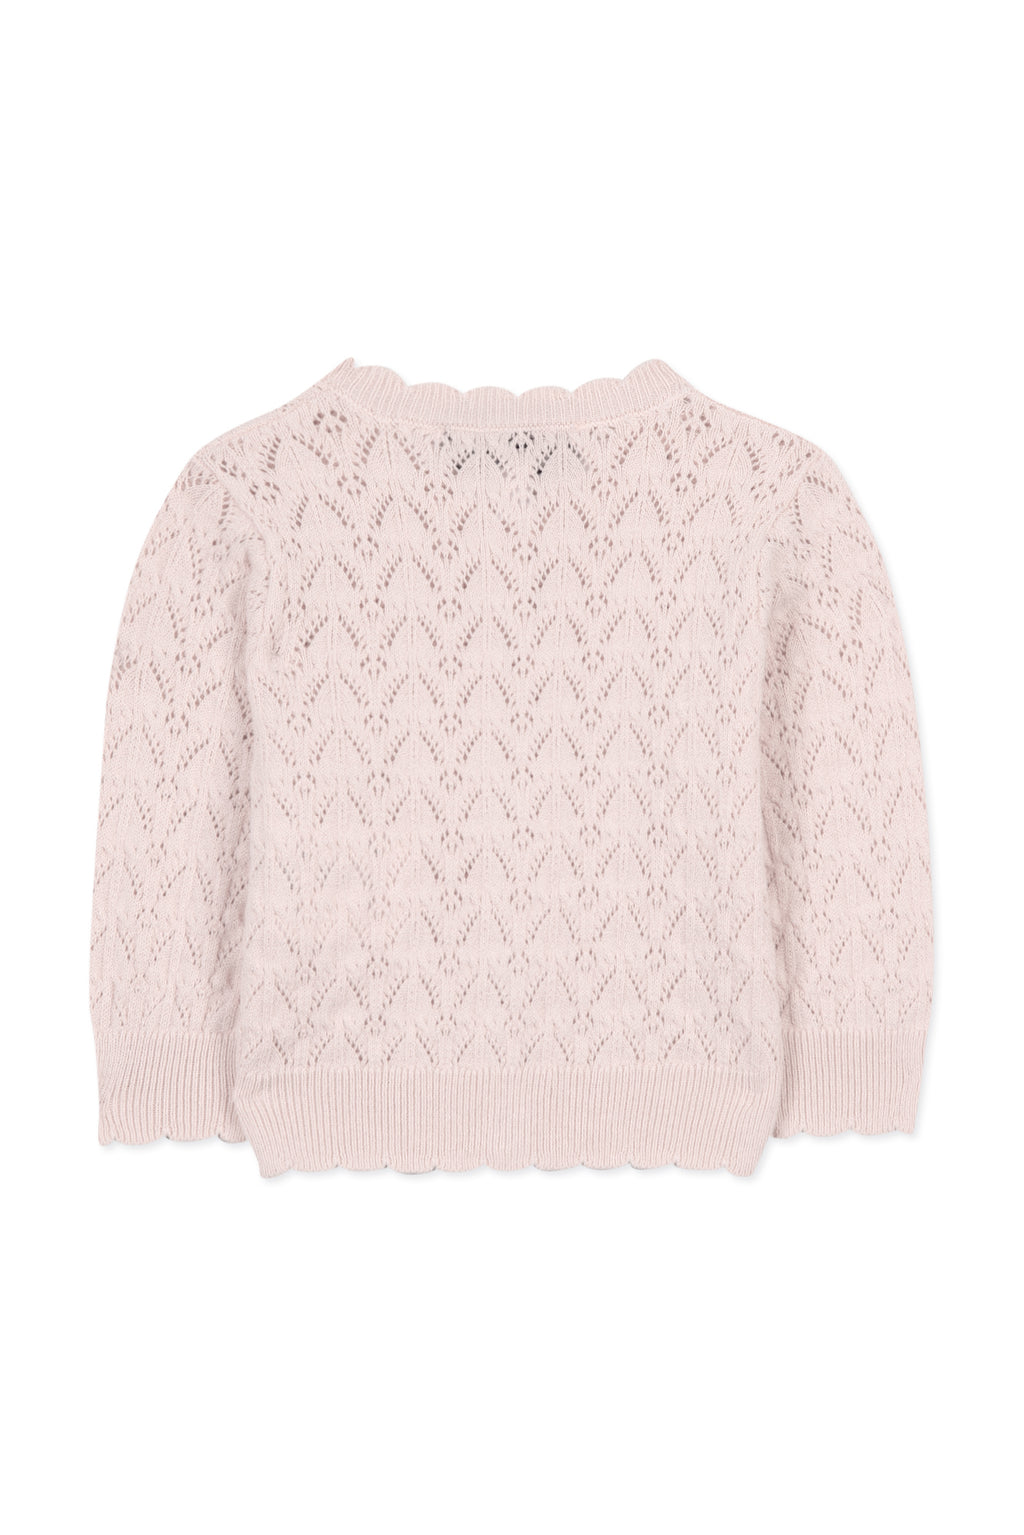 Cardigan - Pale pink Knitwear openwork